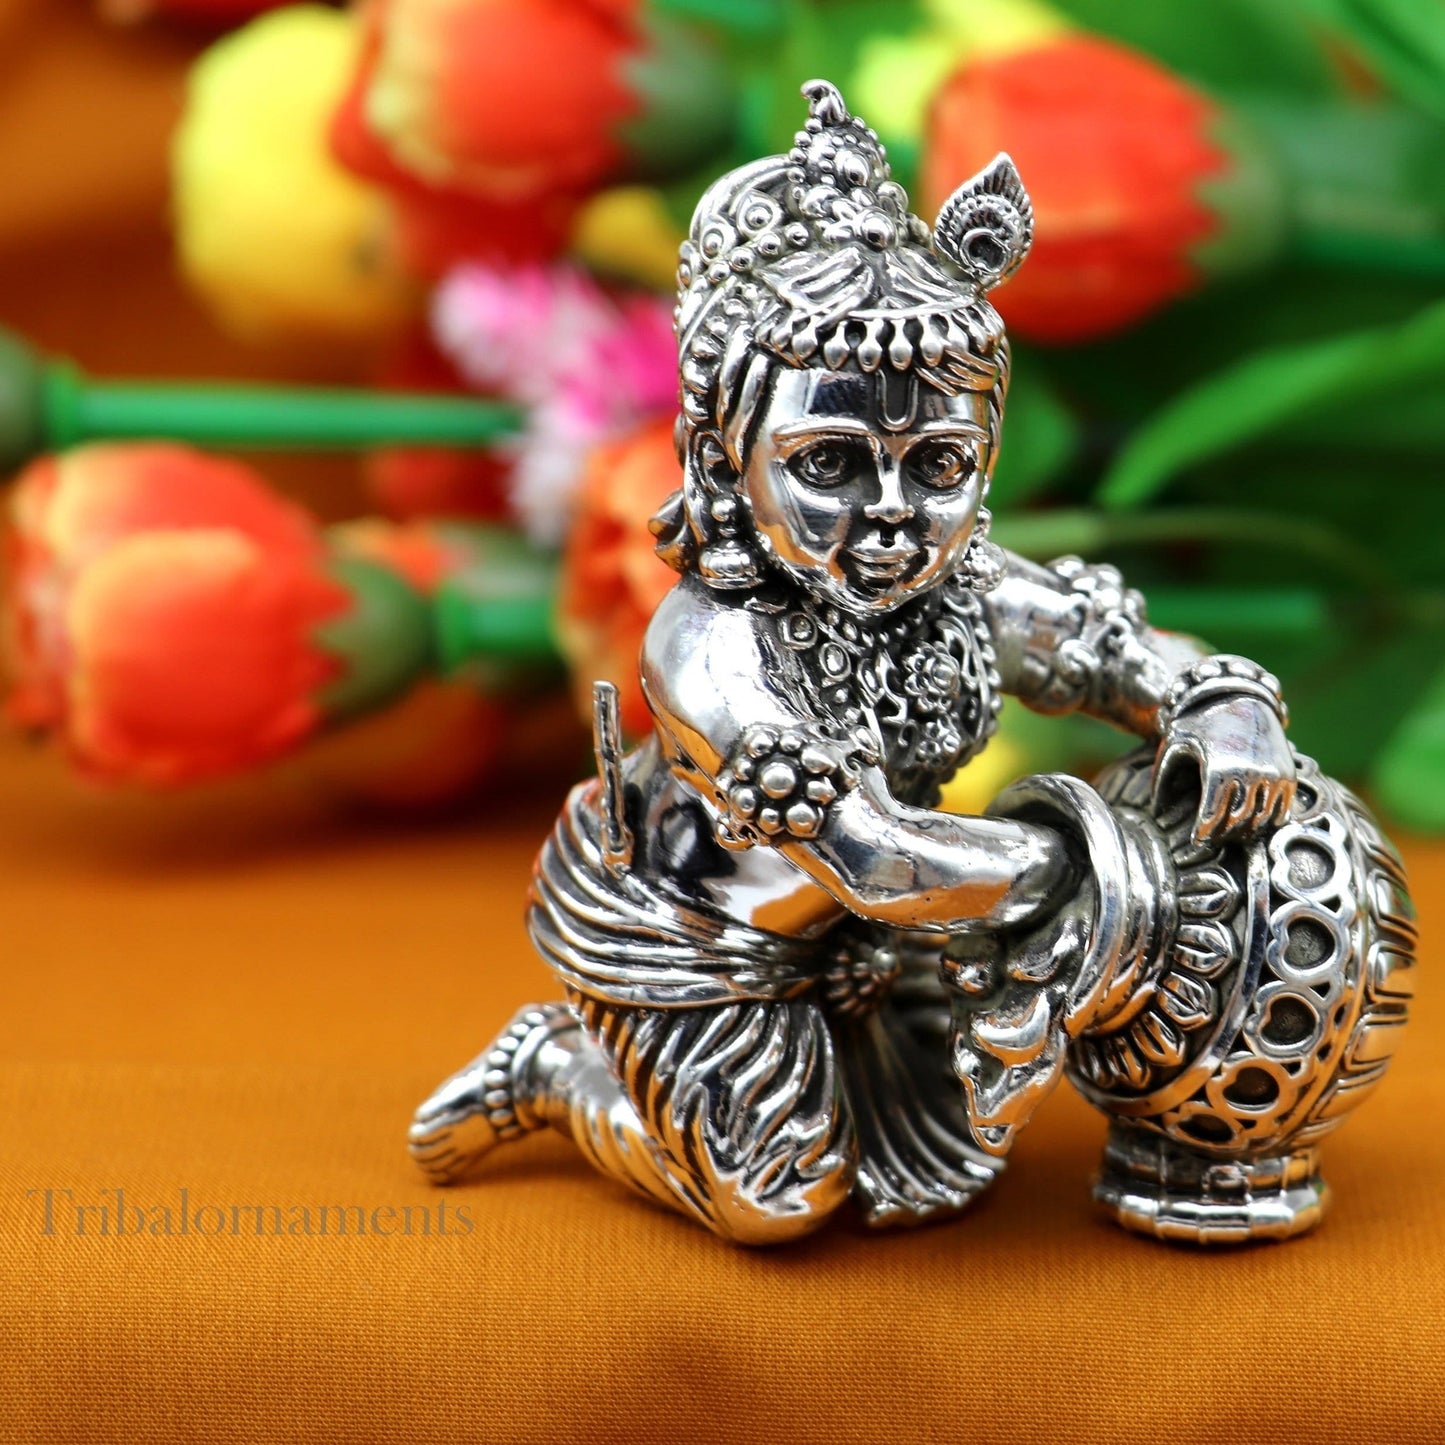 925 Sterling silver customized Idol Krishna Bal Gopal statue figurine, laddu gopal crawling Krishna sculpture, Makhan gopala statue art221 - TRIBAL ORNAMENTS